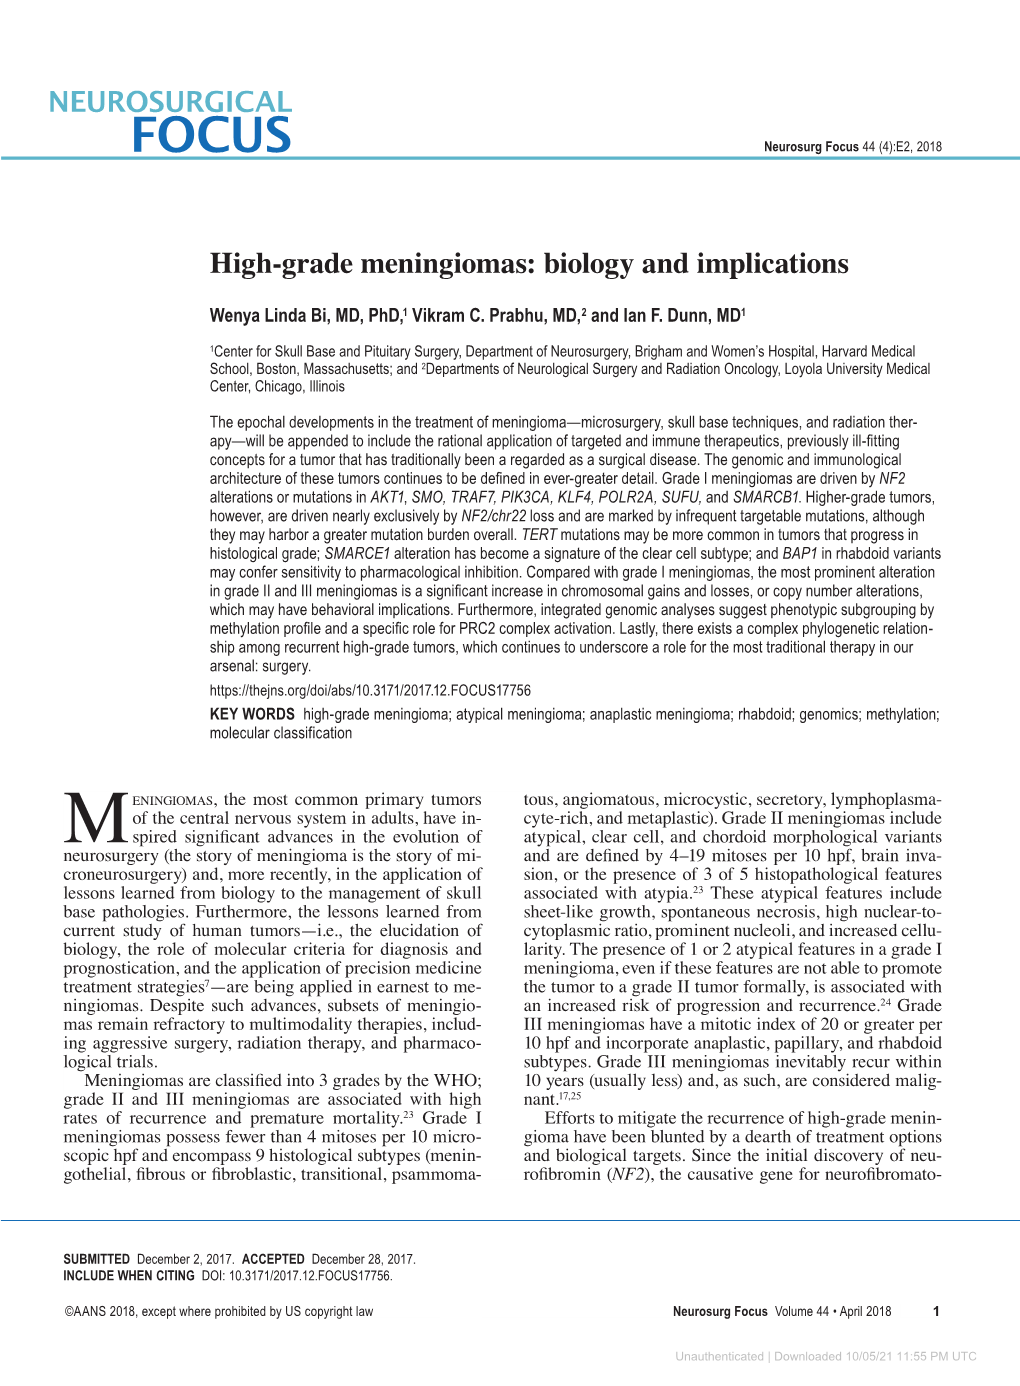 High-Grade Meningiomas: Biology and Implications